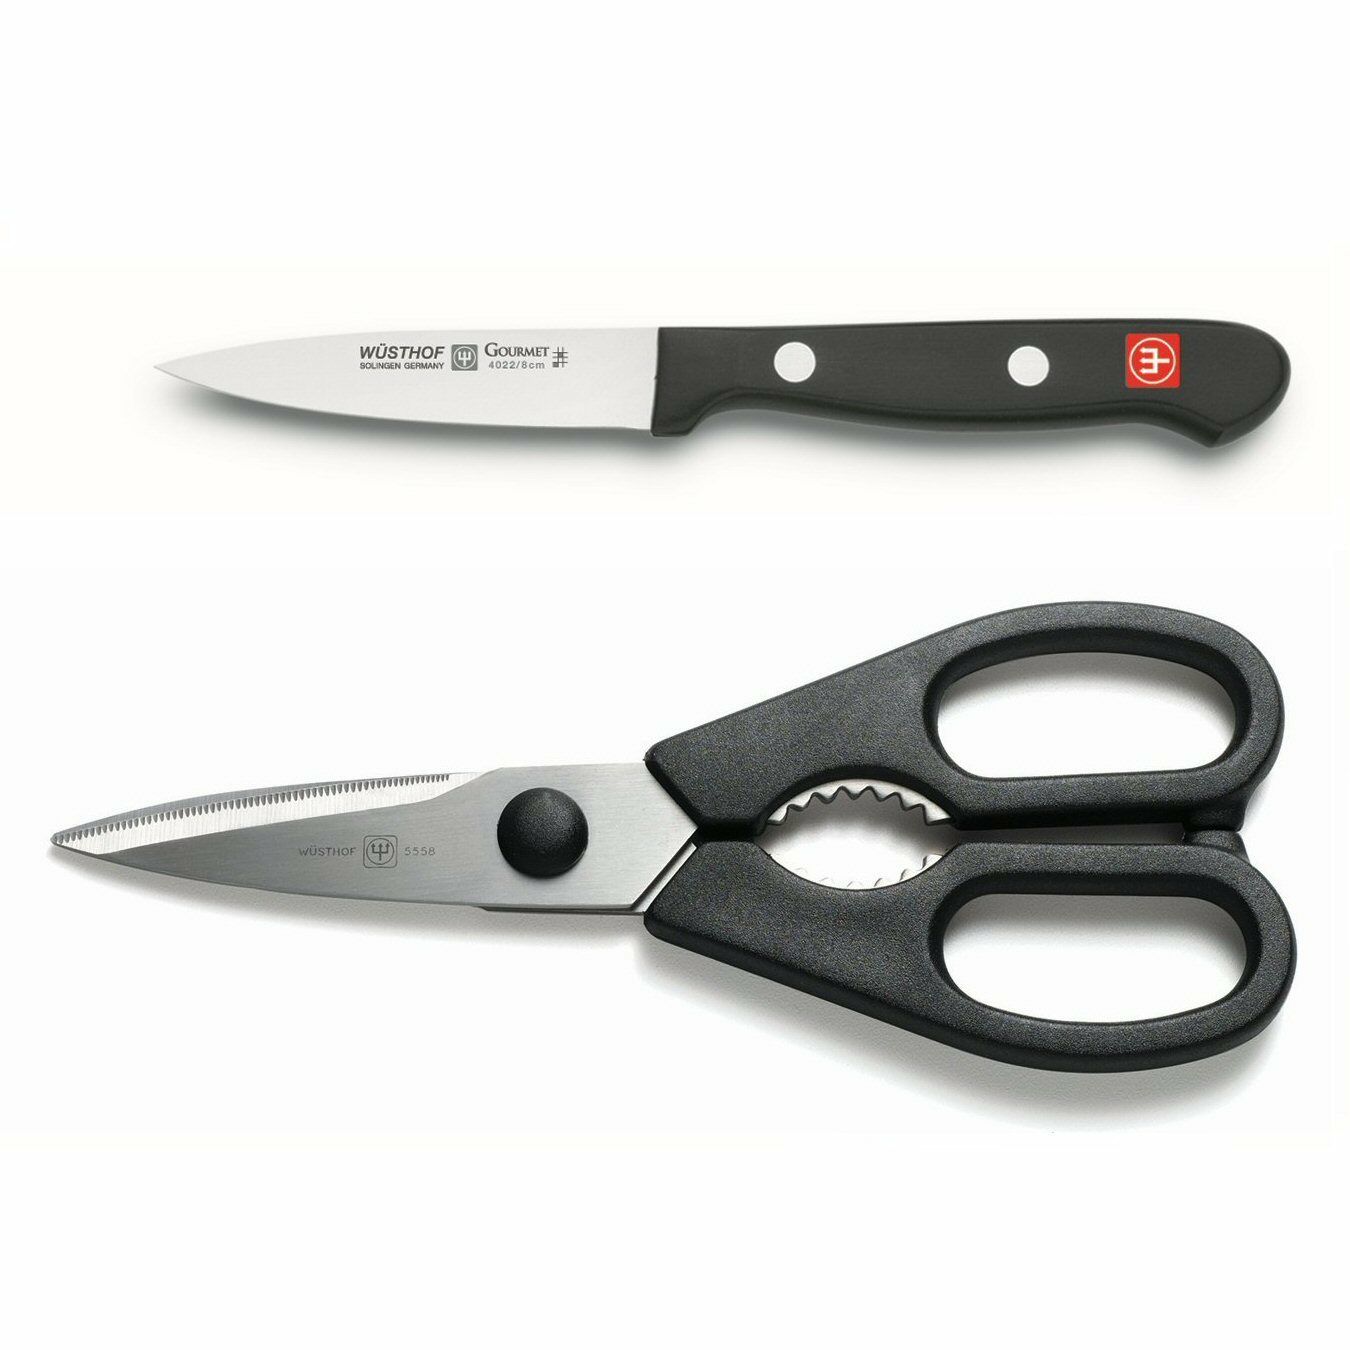 Wusthof Gourmet 2pc Come-apart Kitchen Shears / Scissors & 3" Paring Knife Set